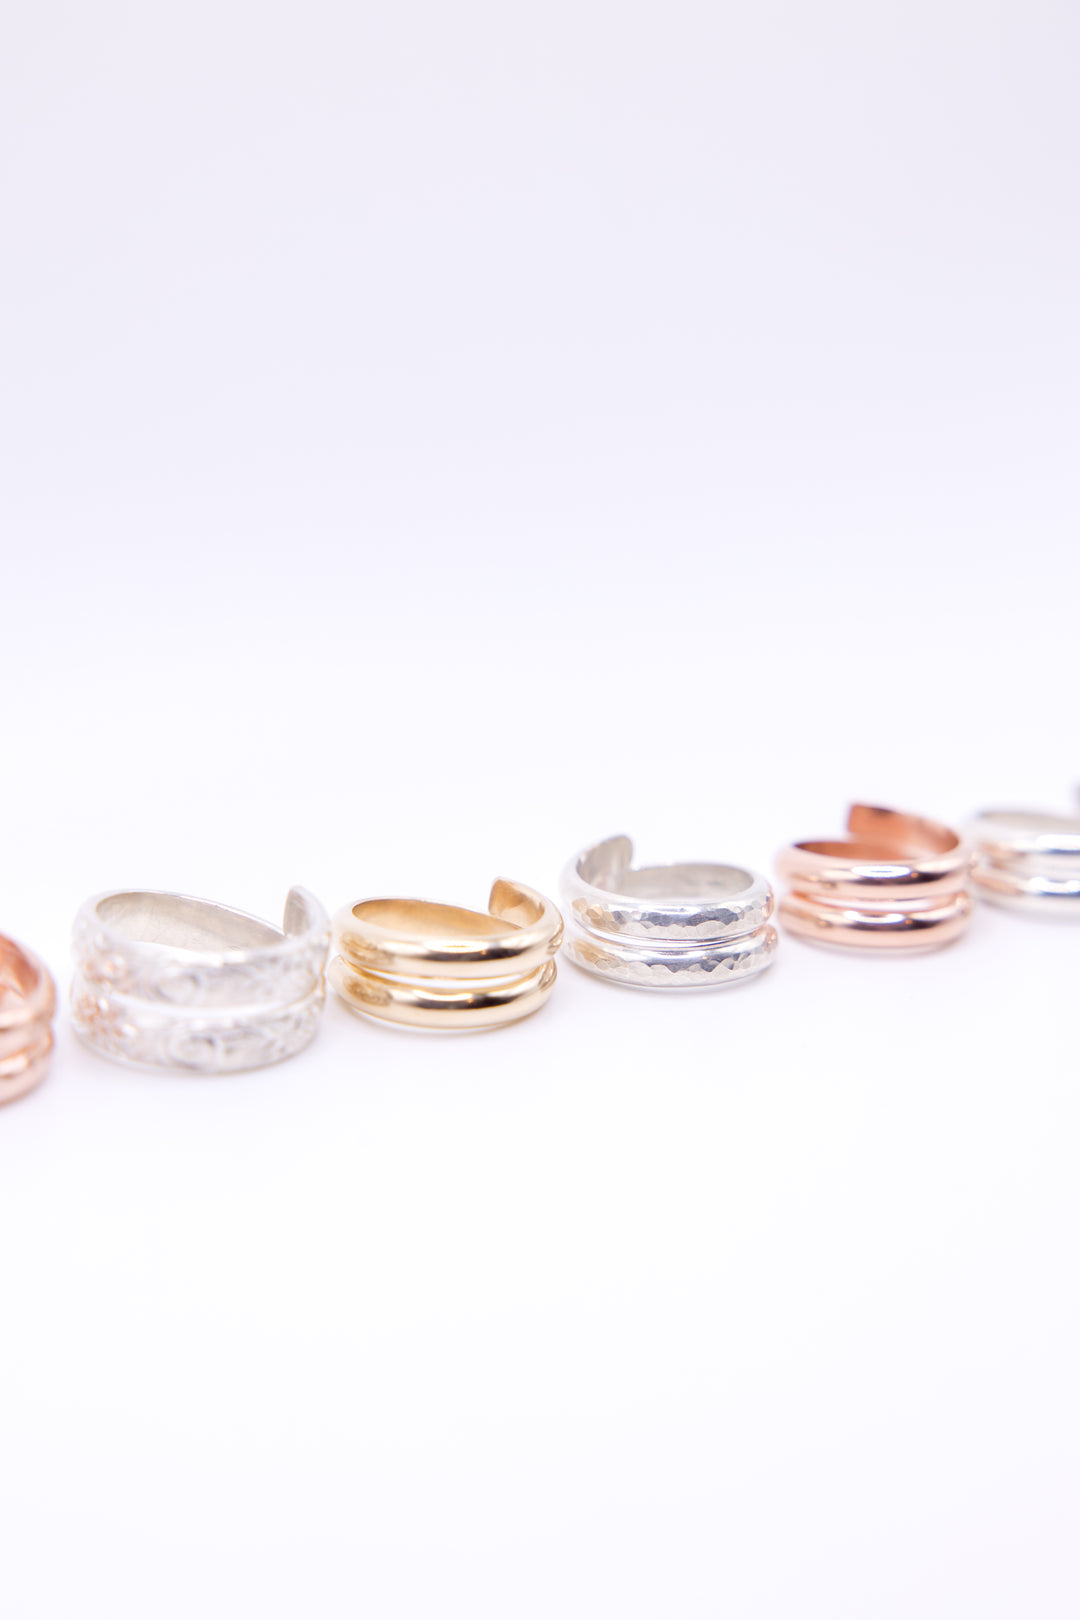 handmade Jewelry rings in Lexington, Kentucky by Anna Shae Jewelry 